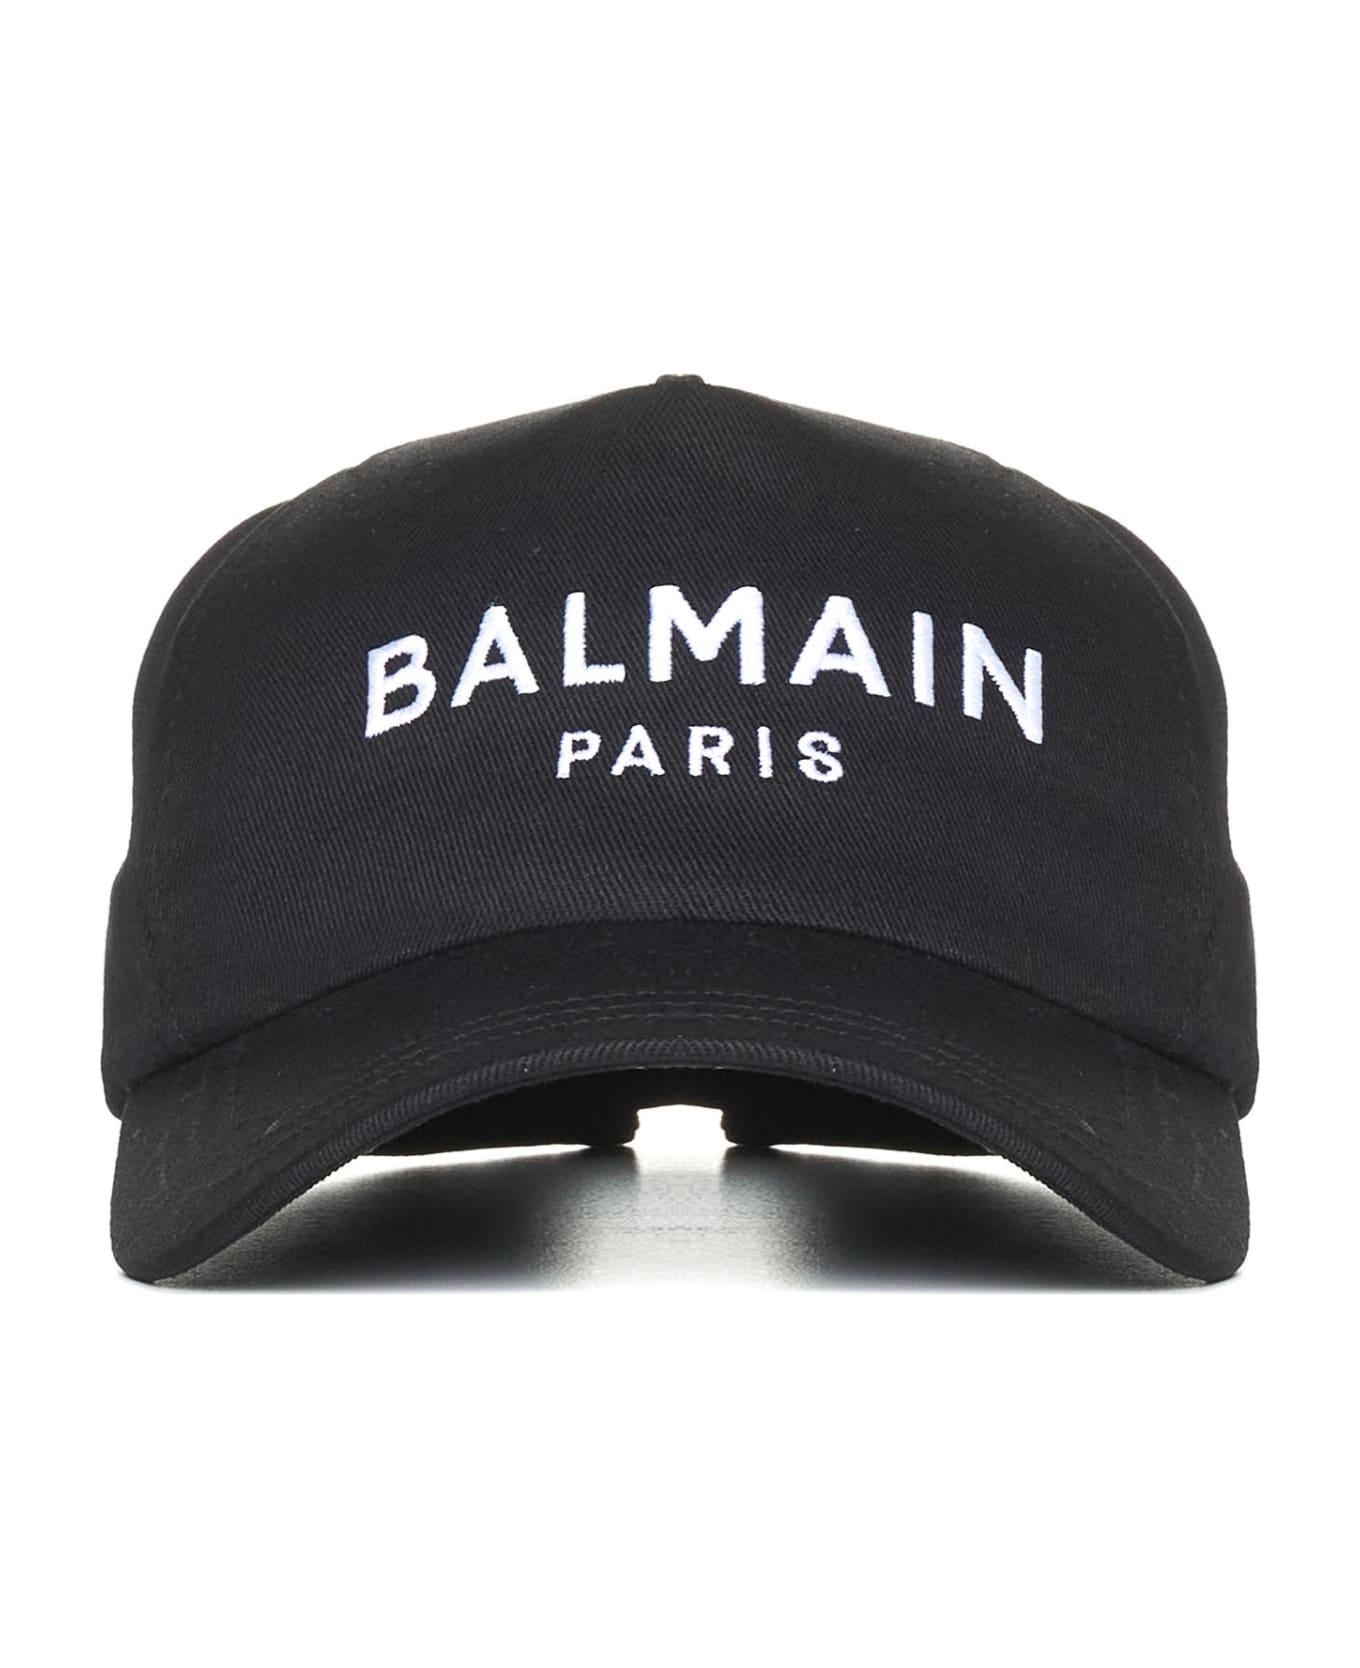 Balmain Hat - Noir/blanc